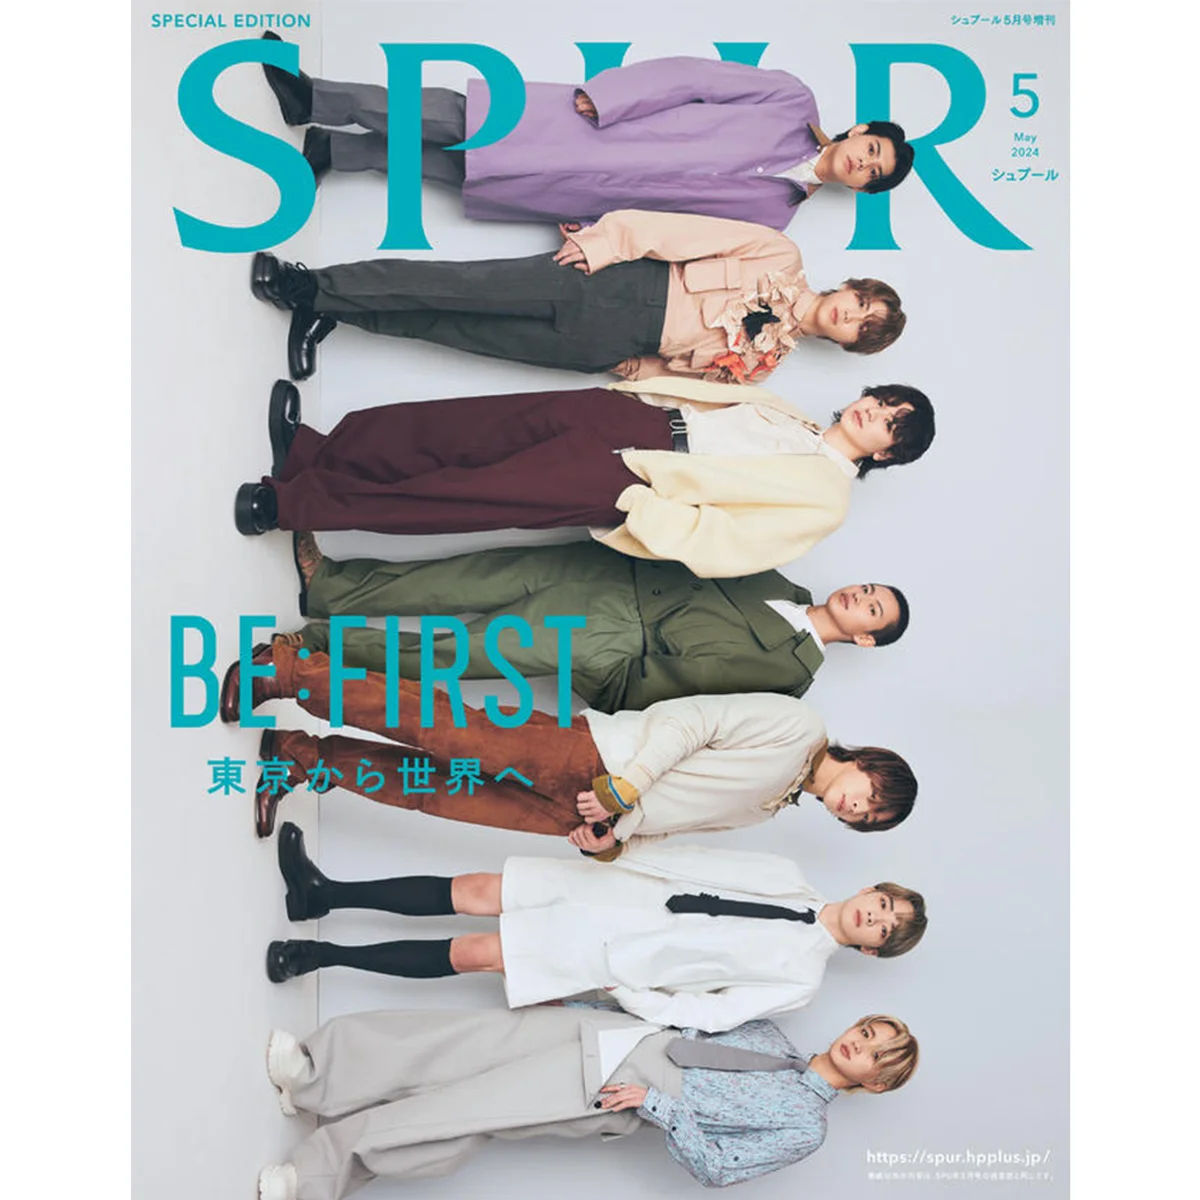 SPUR5月号増刊のカバーはBE:FIRST。彼らが東京ドームの次に目指す場所とは？